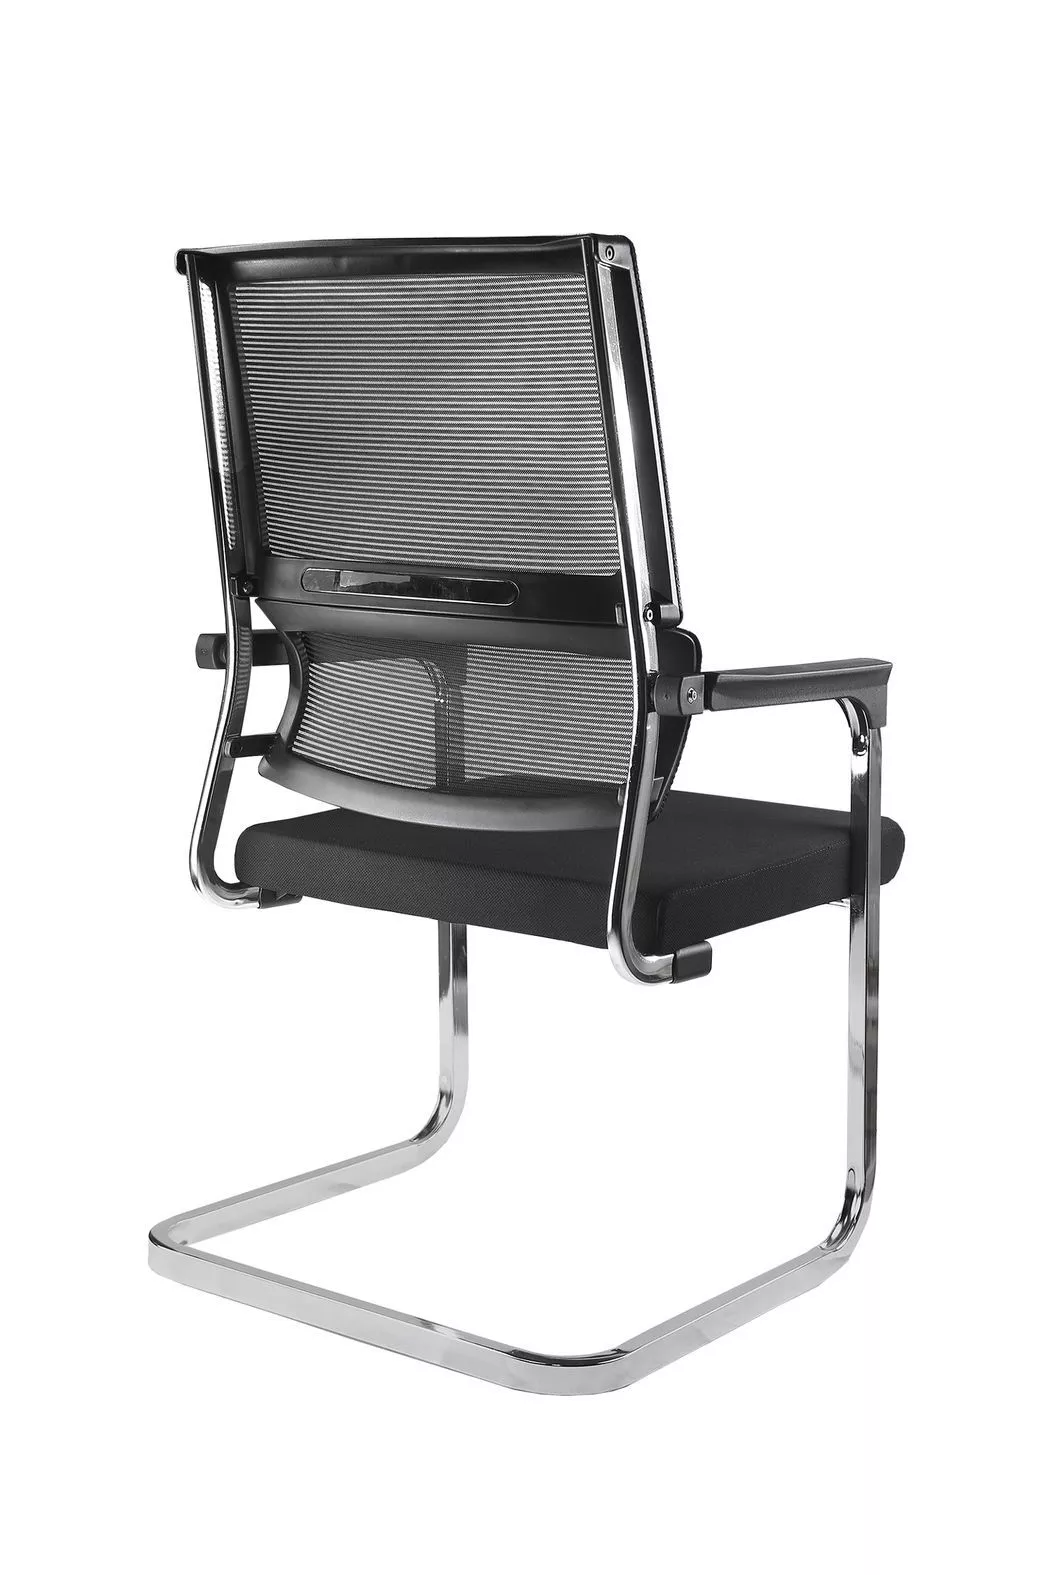 Конференц кресло Riva Chair lone D201 черный